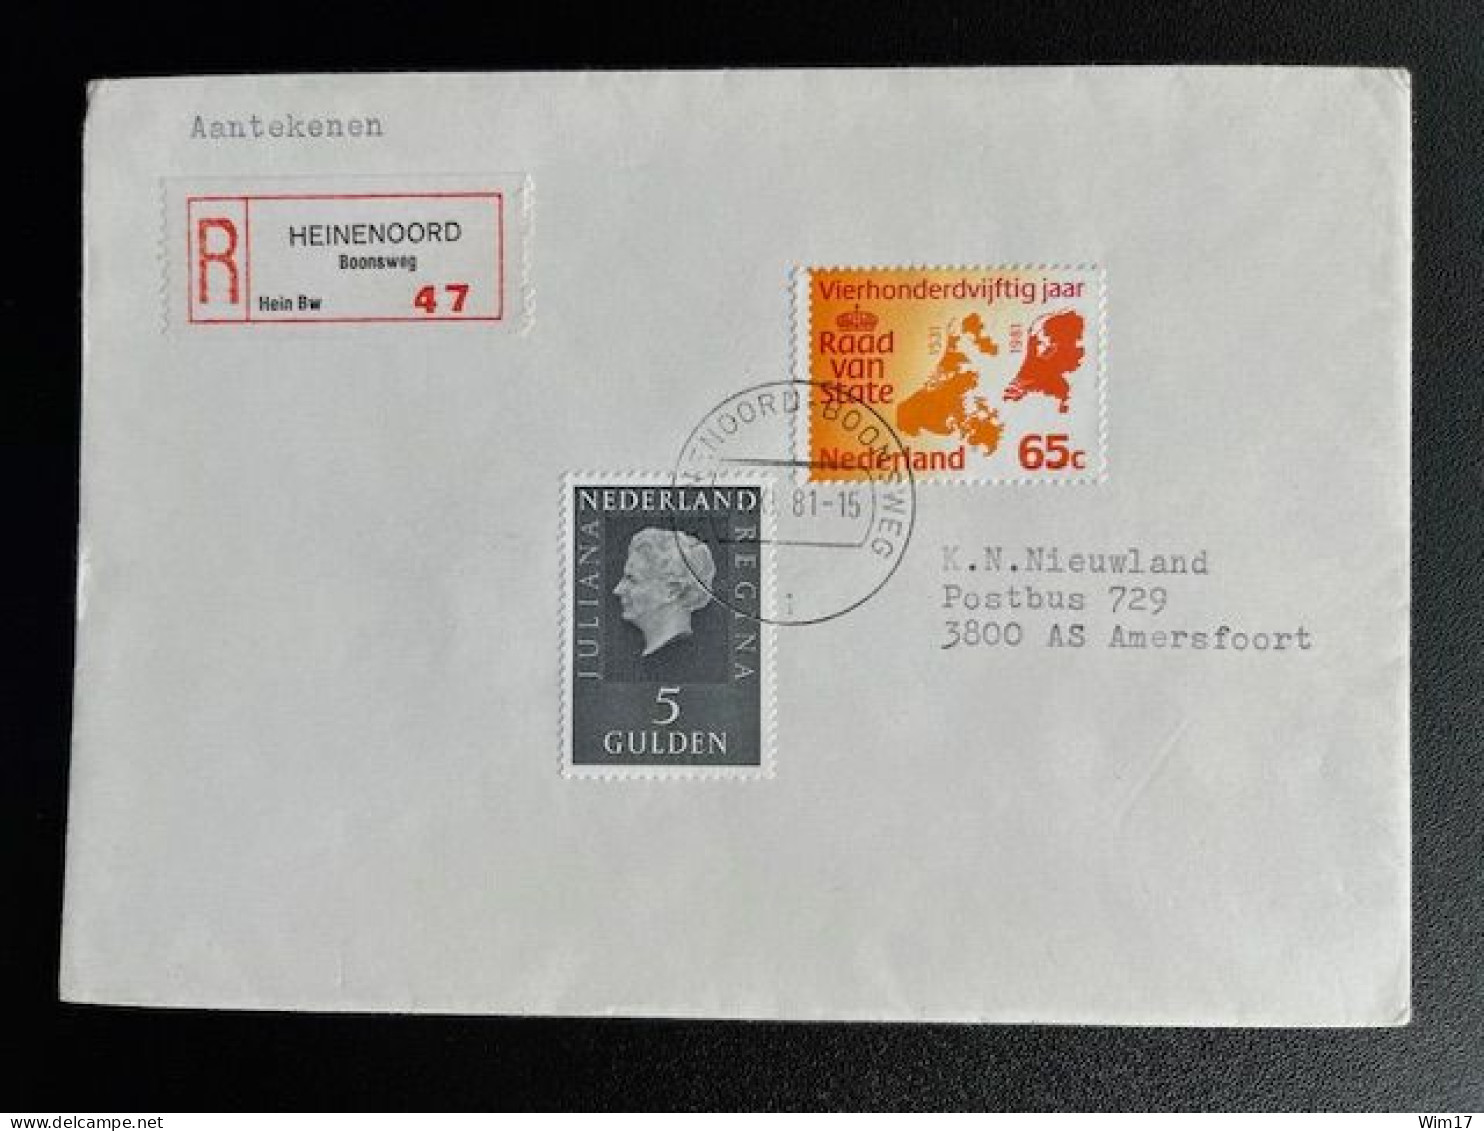 NETHERLANDS 1981 REGISTERED LETTER HEINENOORD BOONSWEG TO AMERSFOORT 19-11-1981 NEDERLAND AANGETEKEND - Lettres & Documents